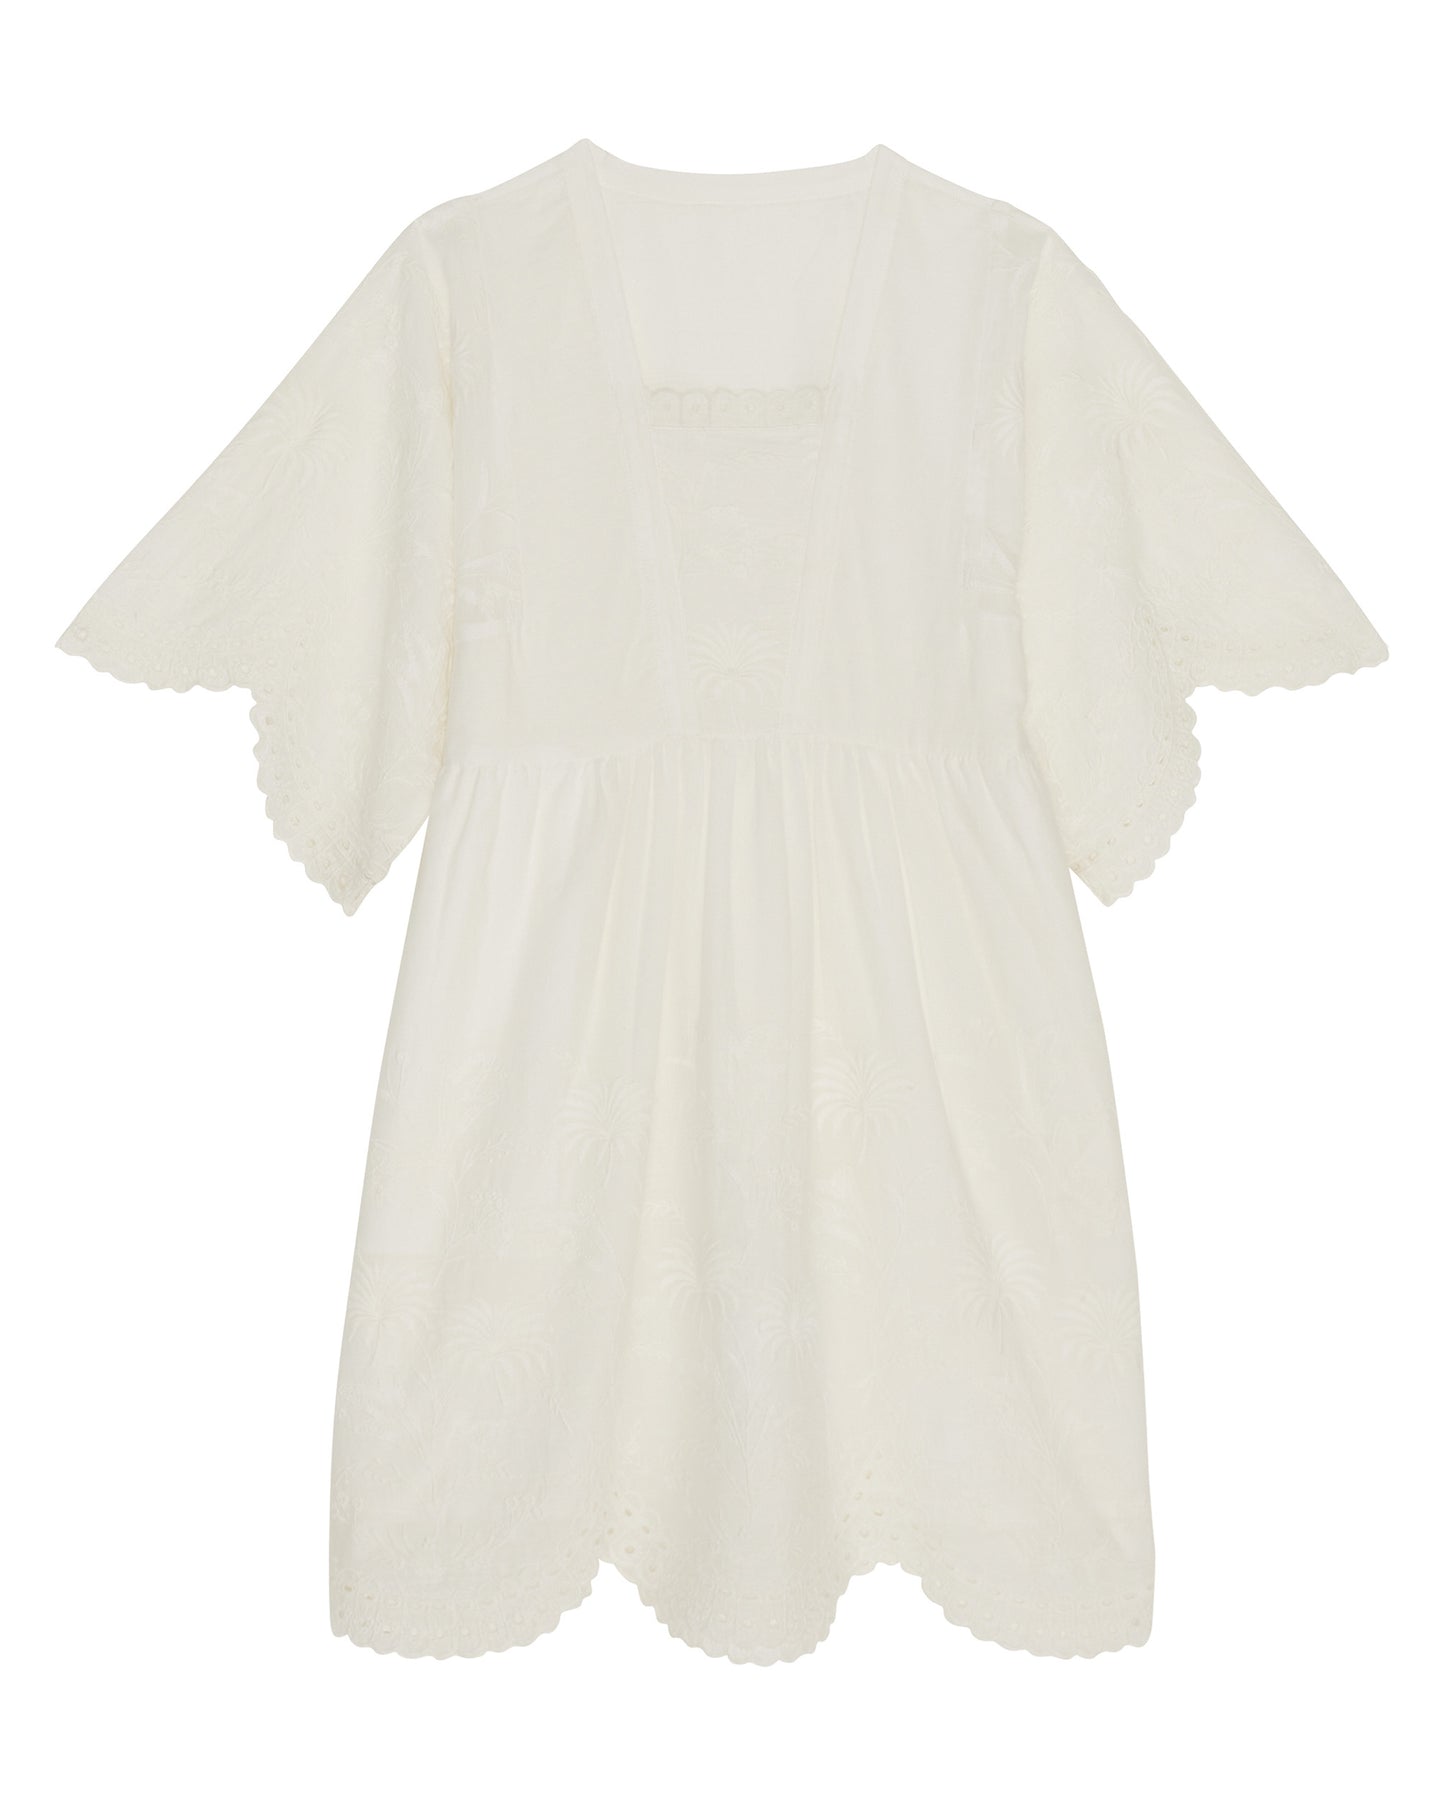 Reggio Girls' Embroidered Off-White Cotton Voile Dress